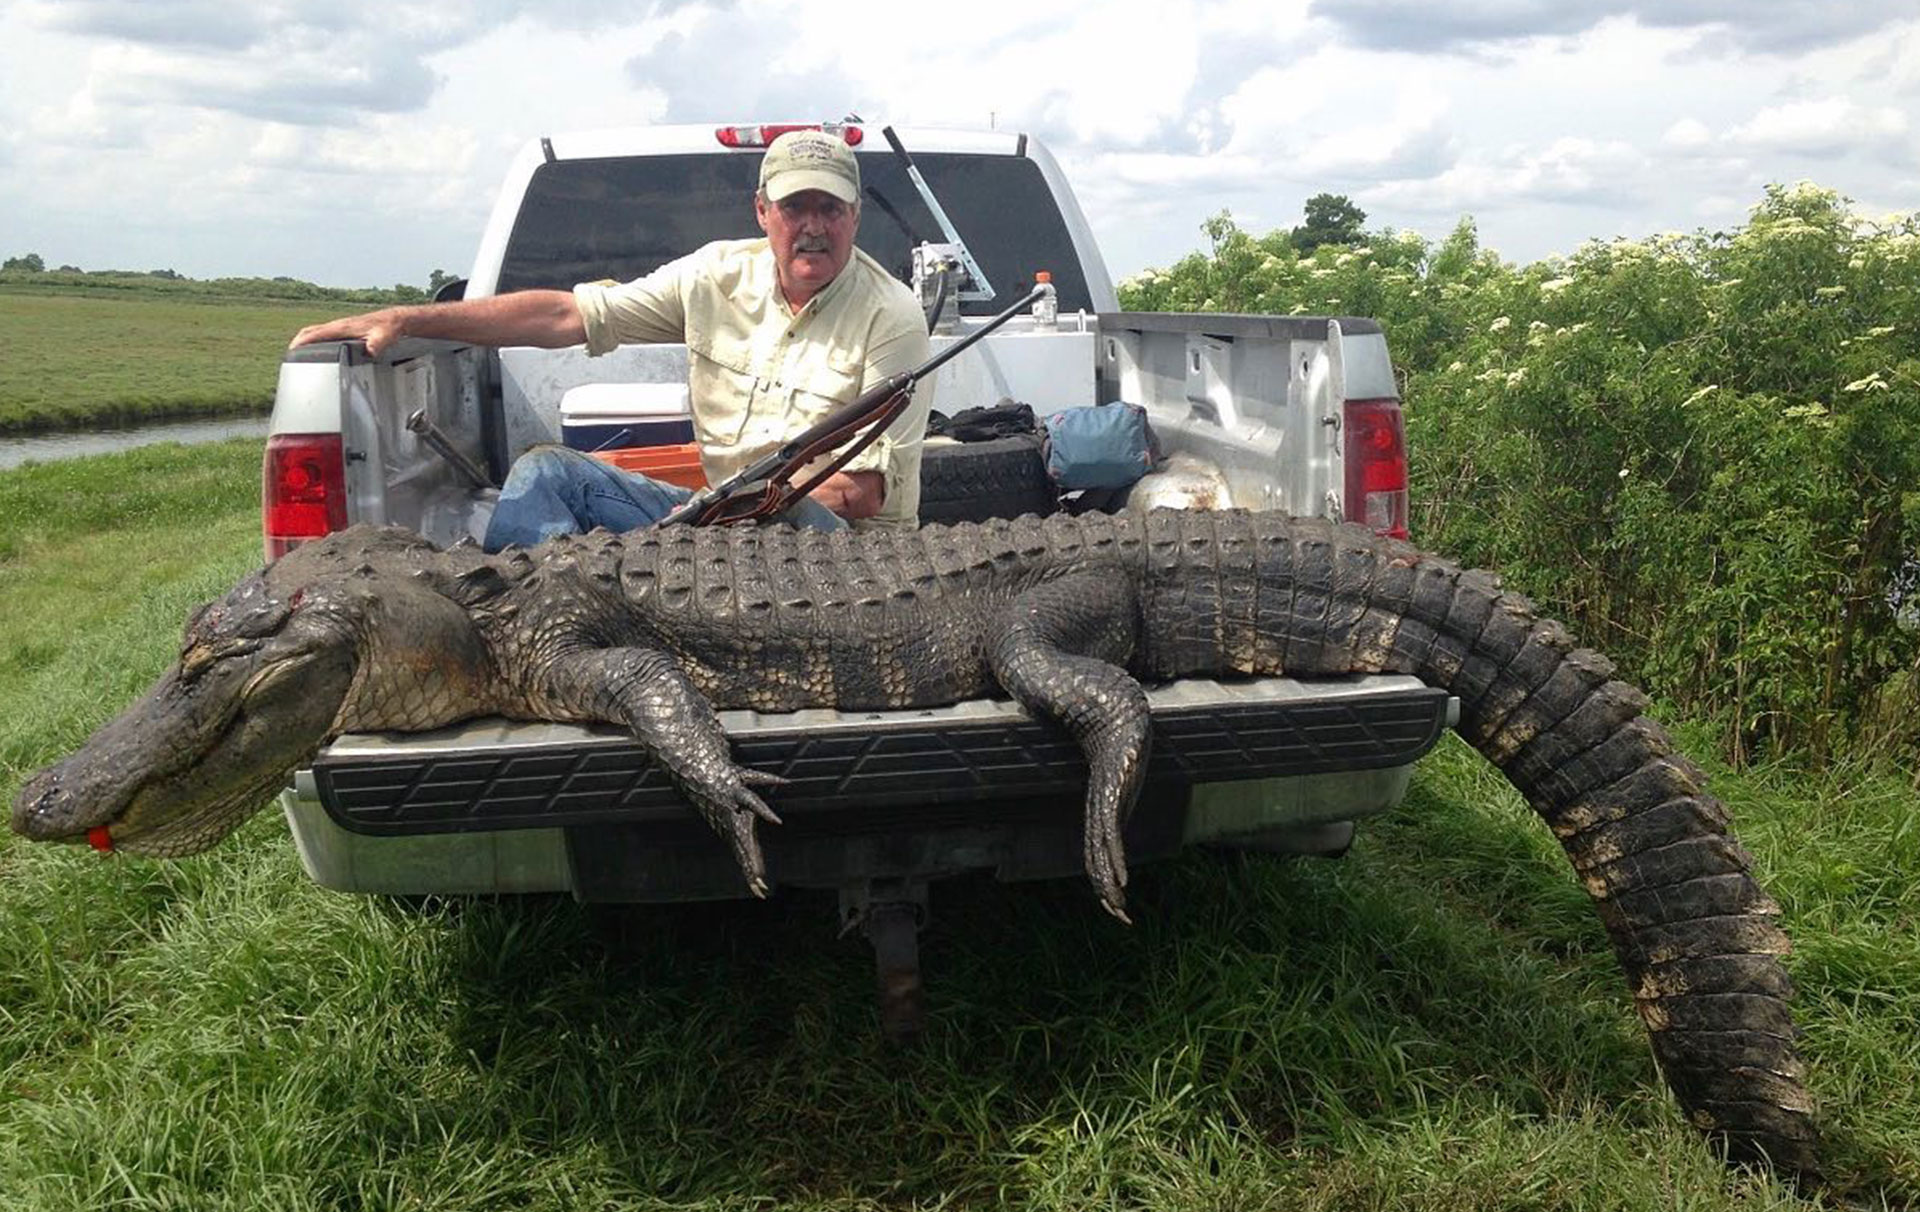 Florida Alligator Hunting